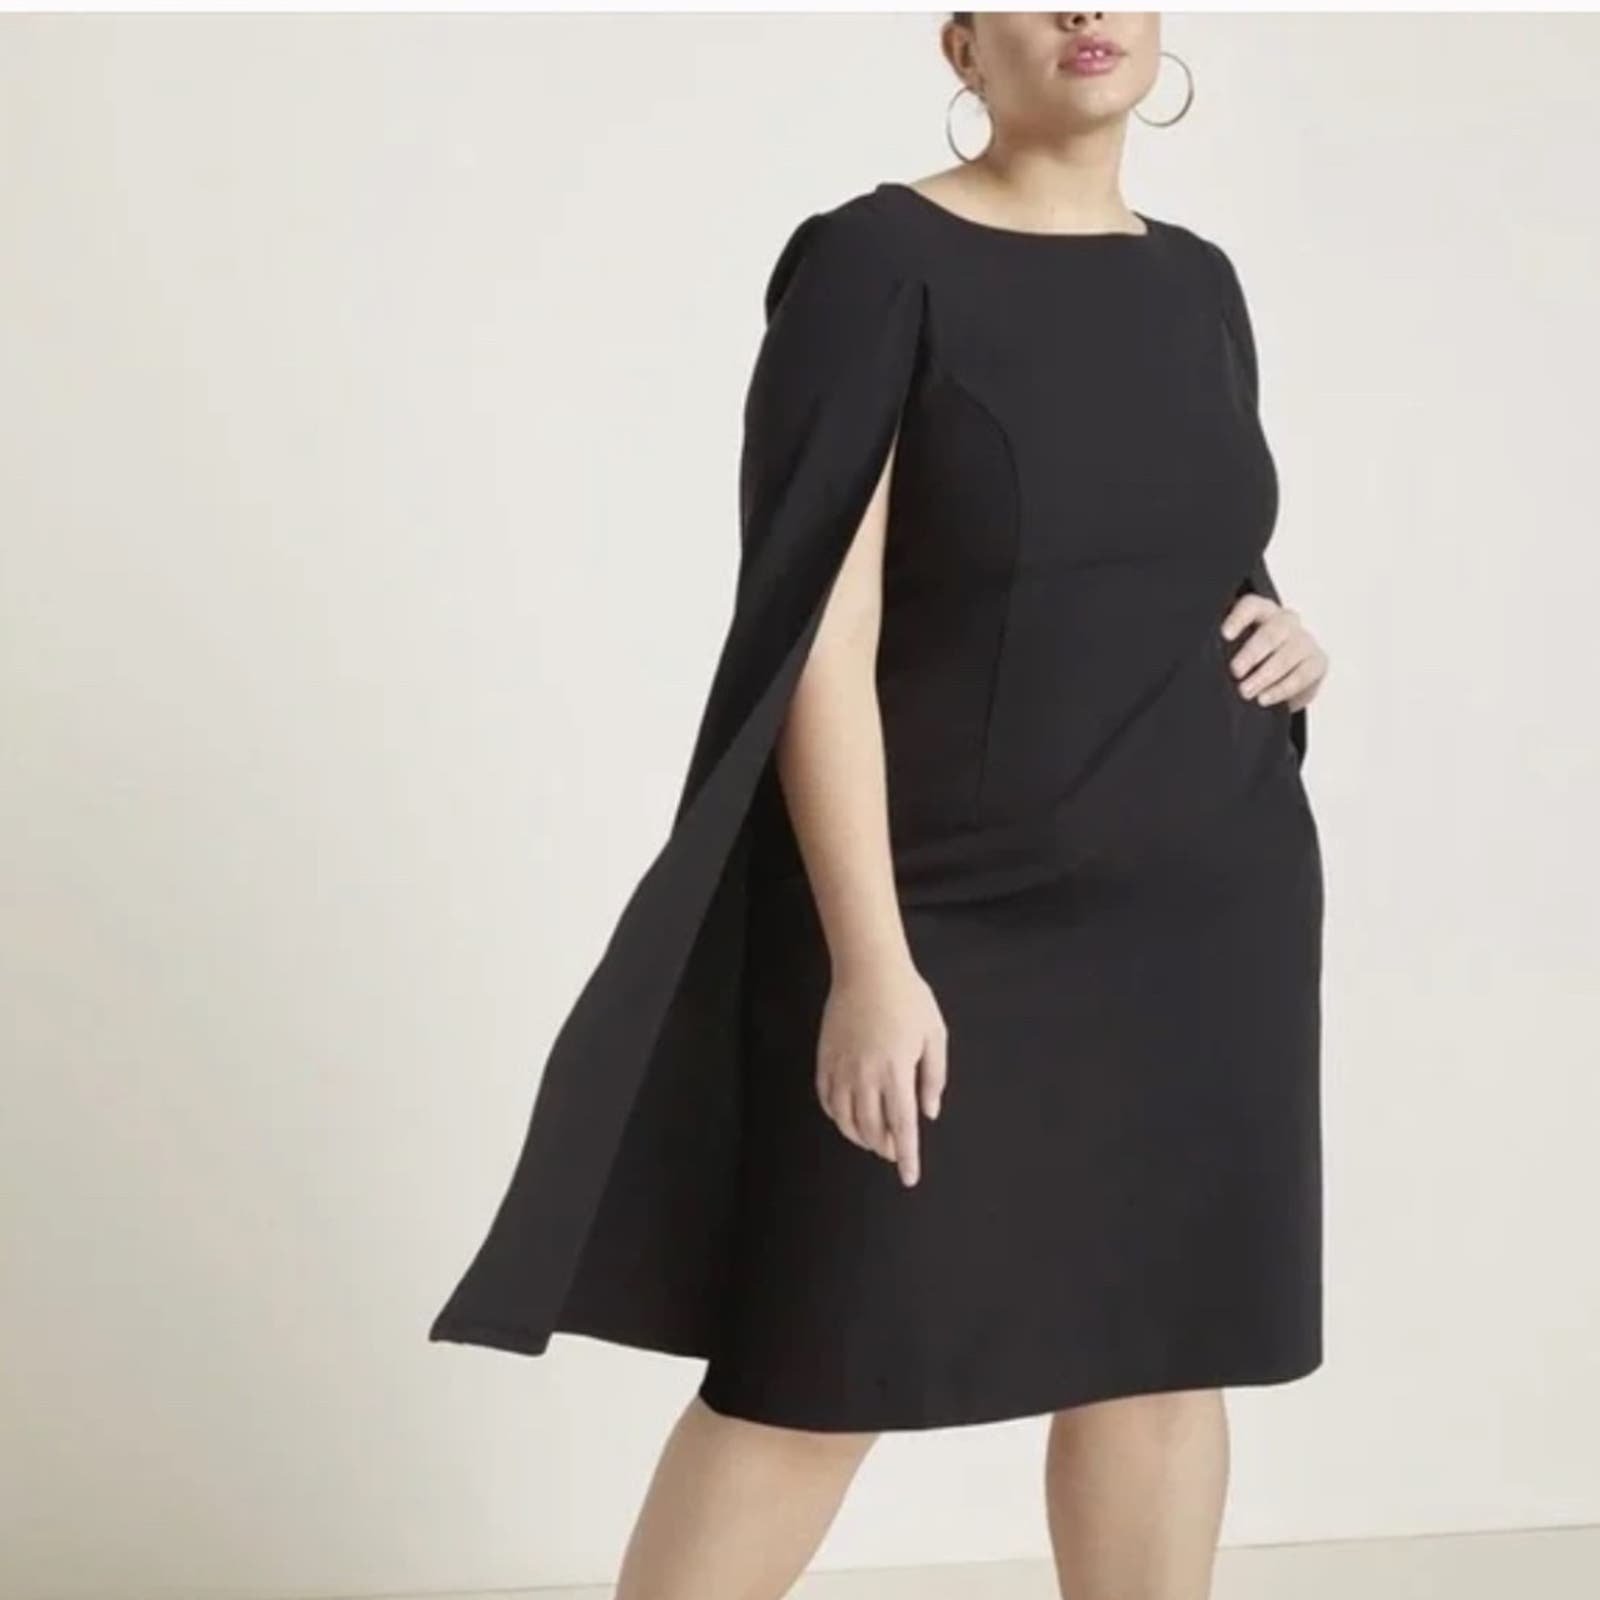 where to buy  Eloquii Black Cape Dress oJy1gK7ub Store 